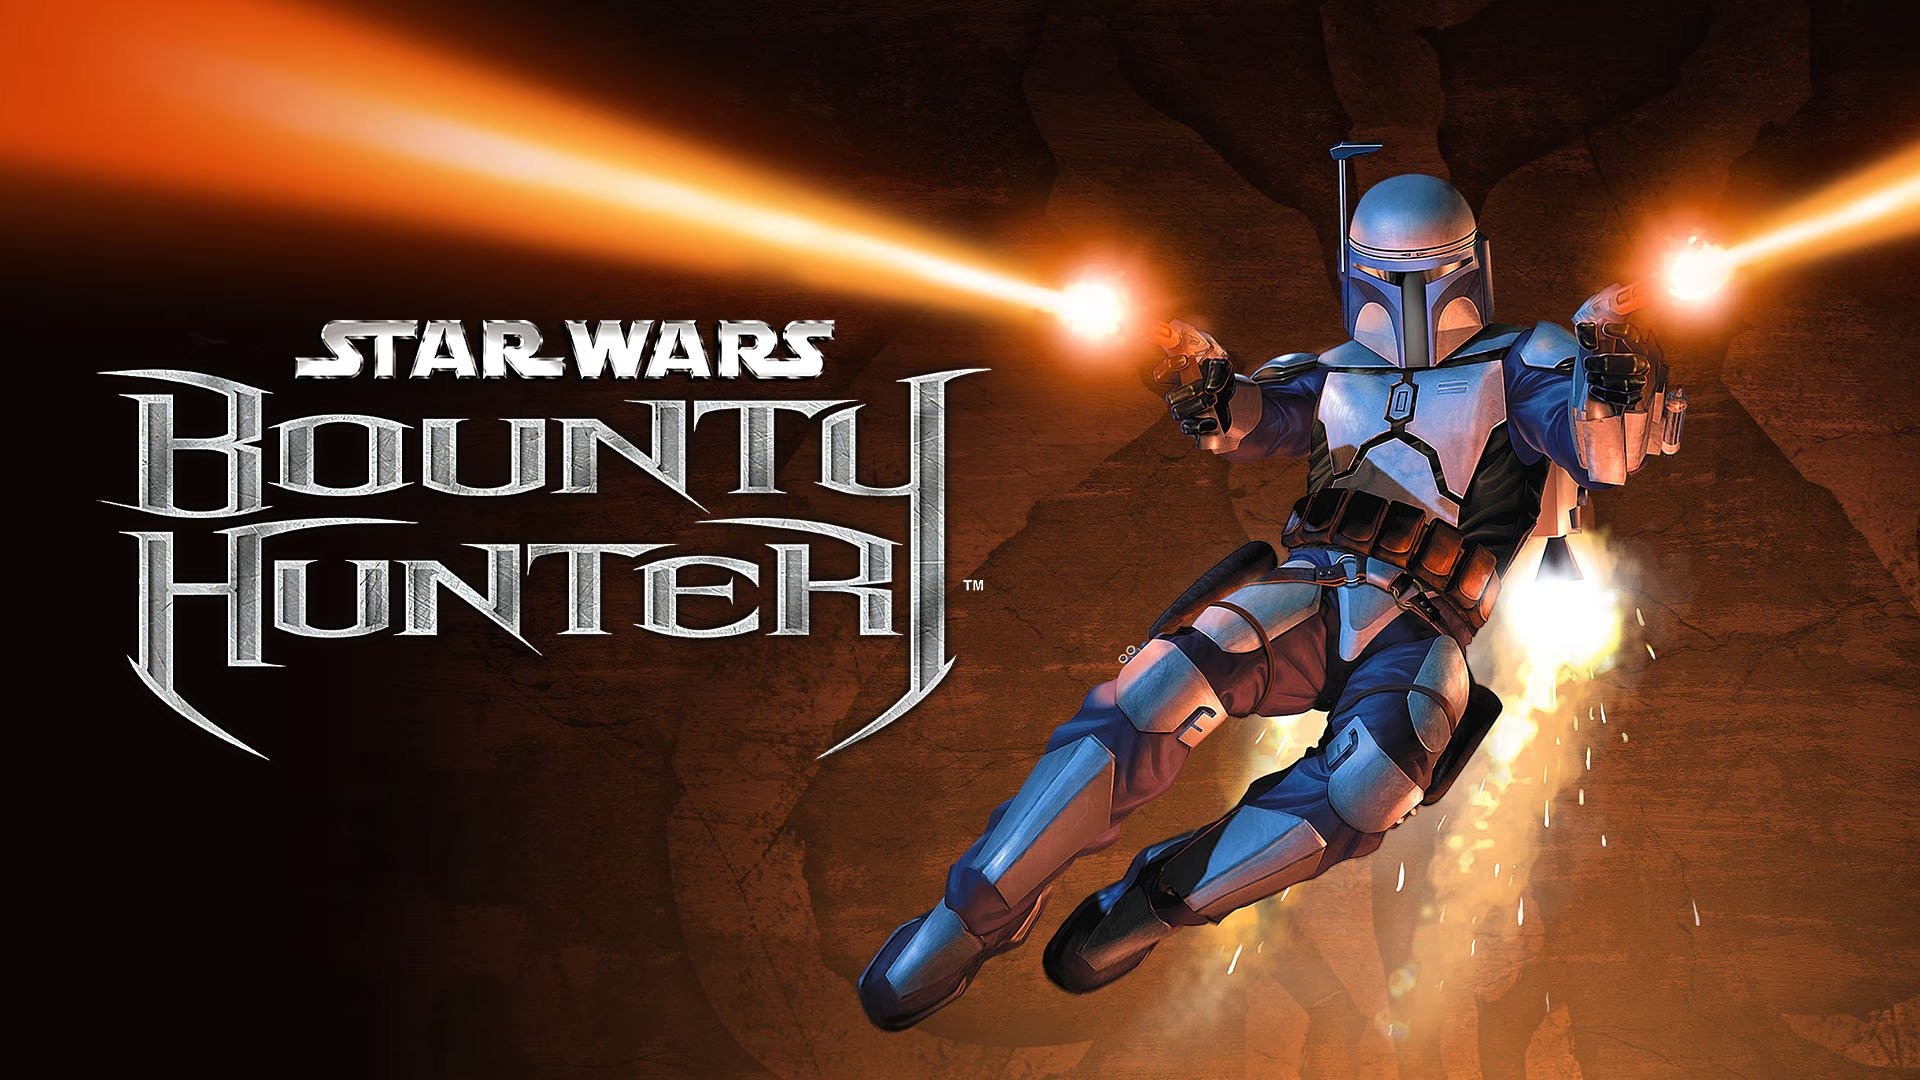 Legendary Hunter Star Wars: Bunty Hunter Returns With Remaster